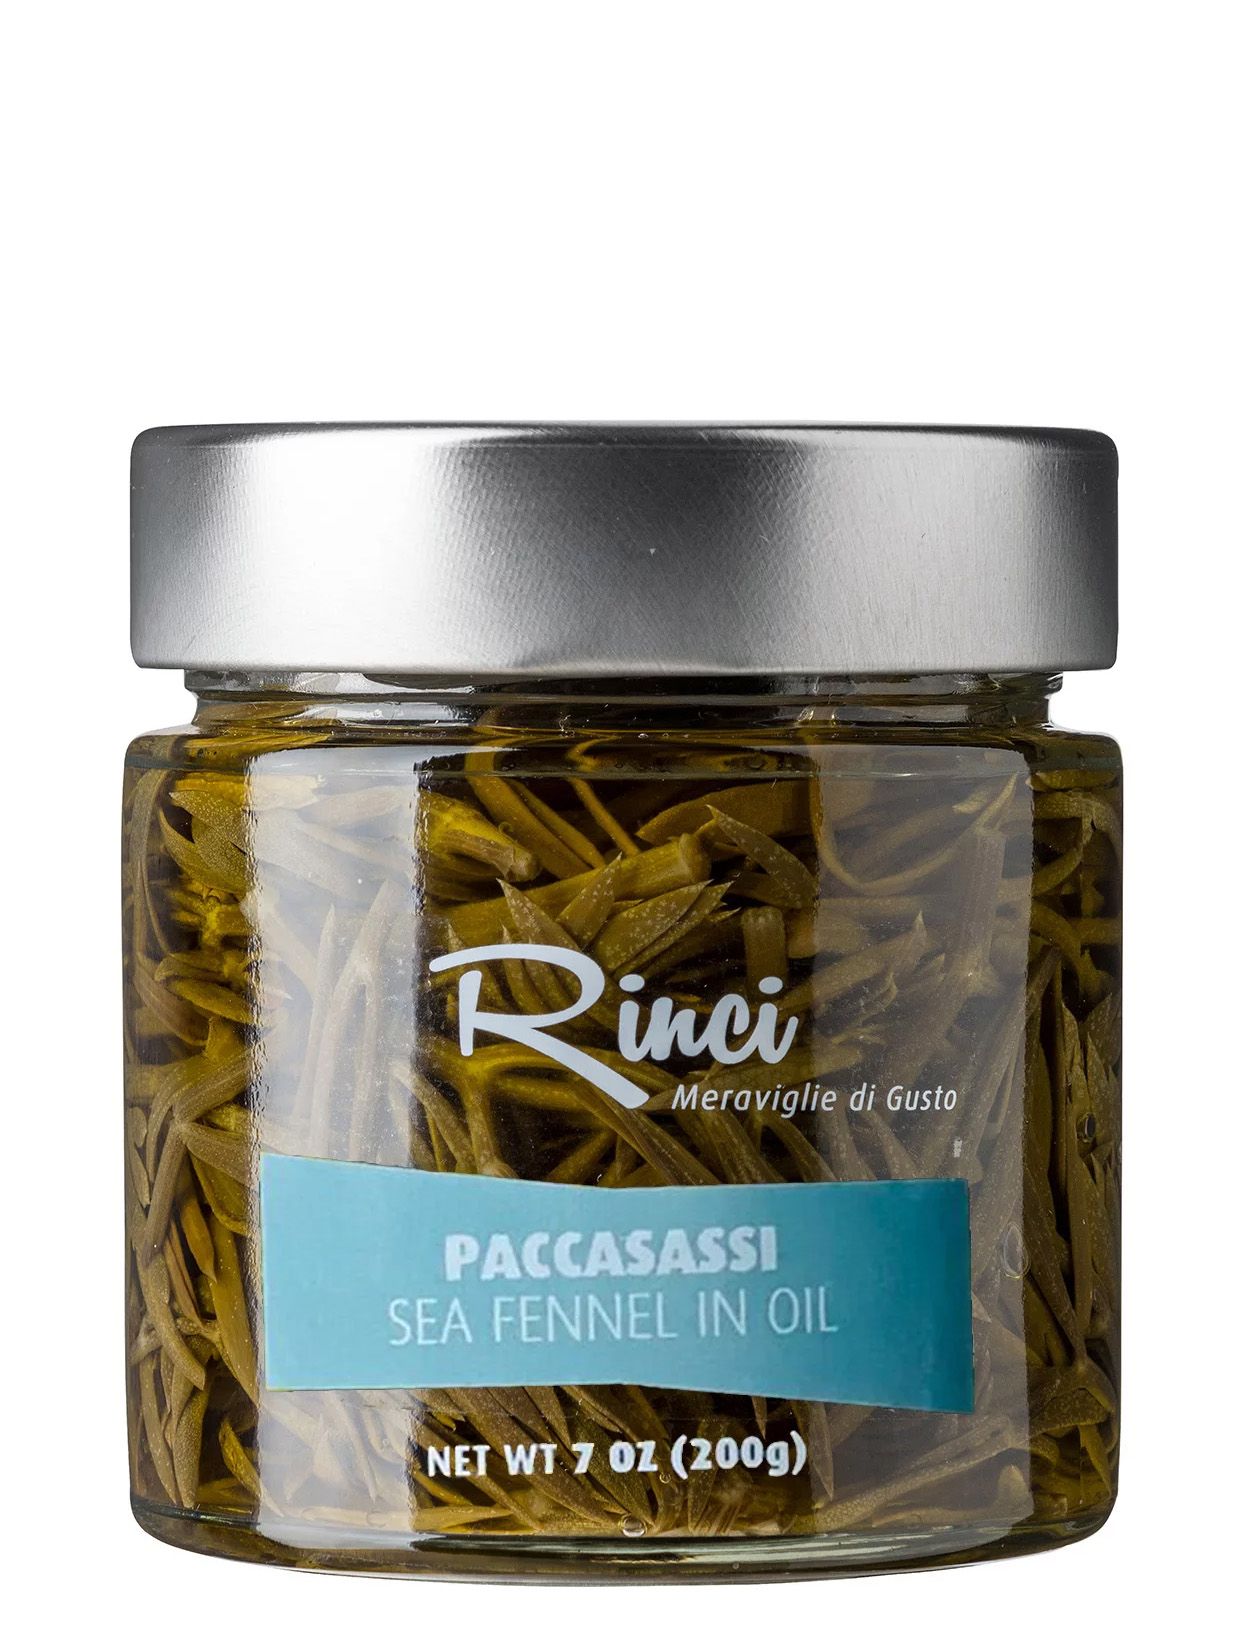 Paccasassi Sott'olio - Pickled Sea Fennel